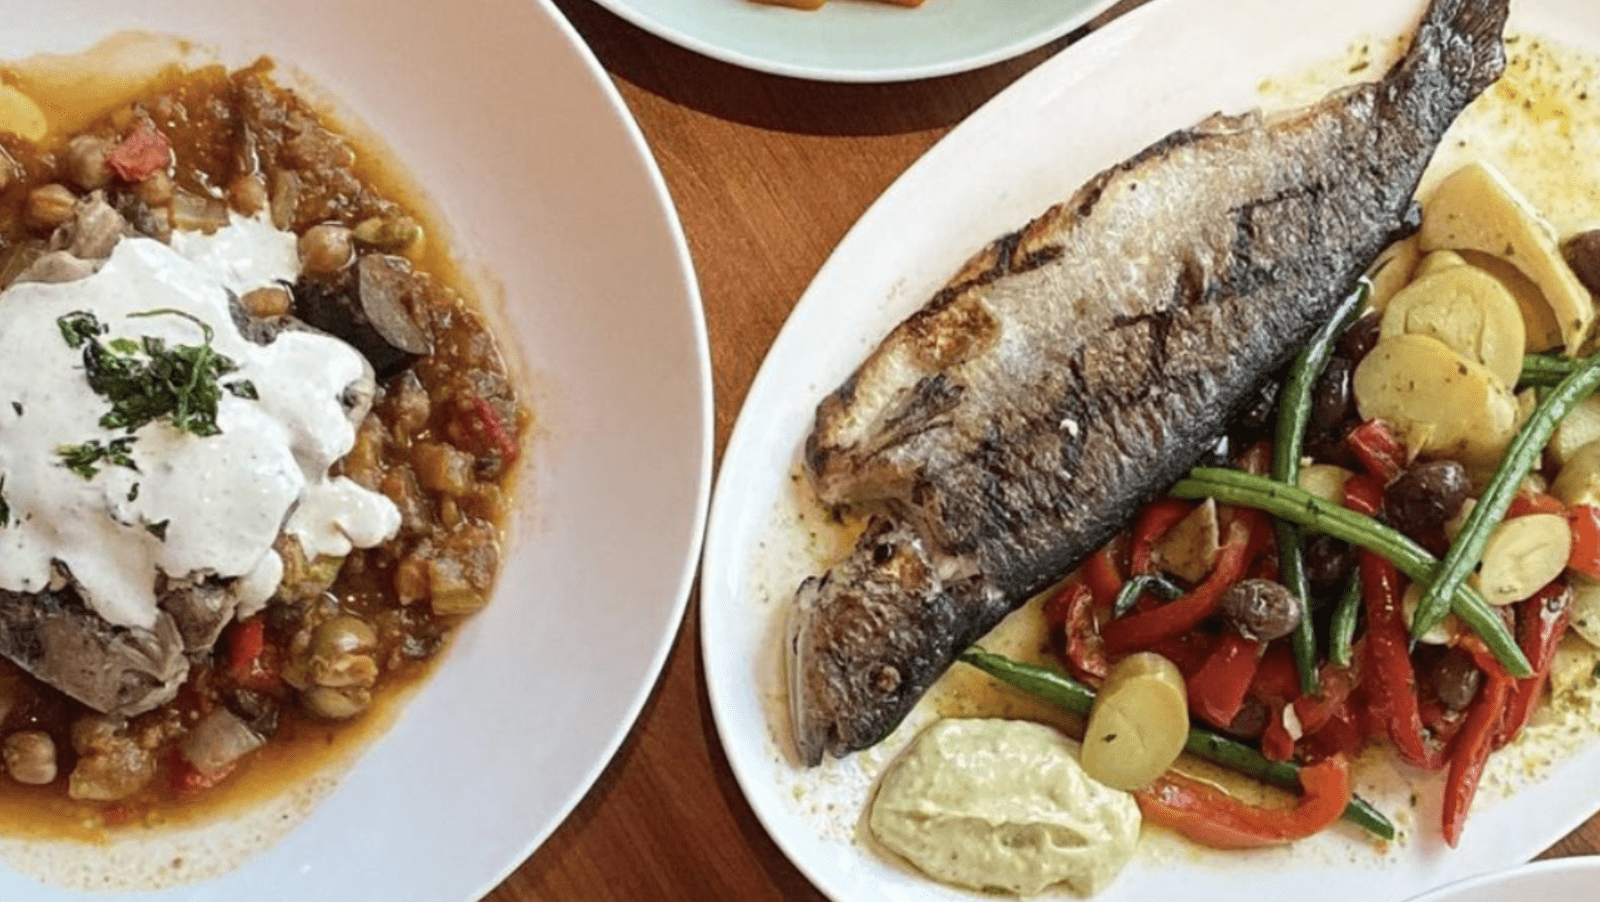 Passionfish-Central-Coast-Dinner-@living_la_vida_laura-800x450-1